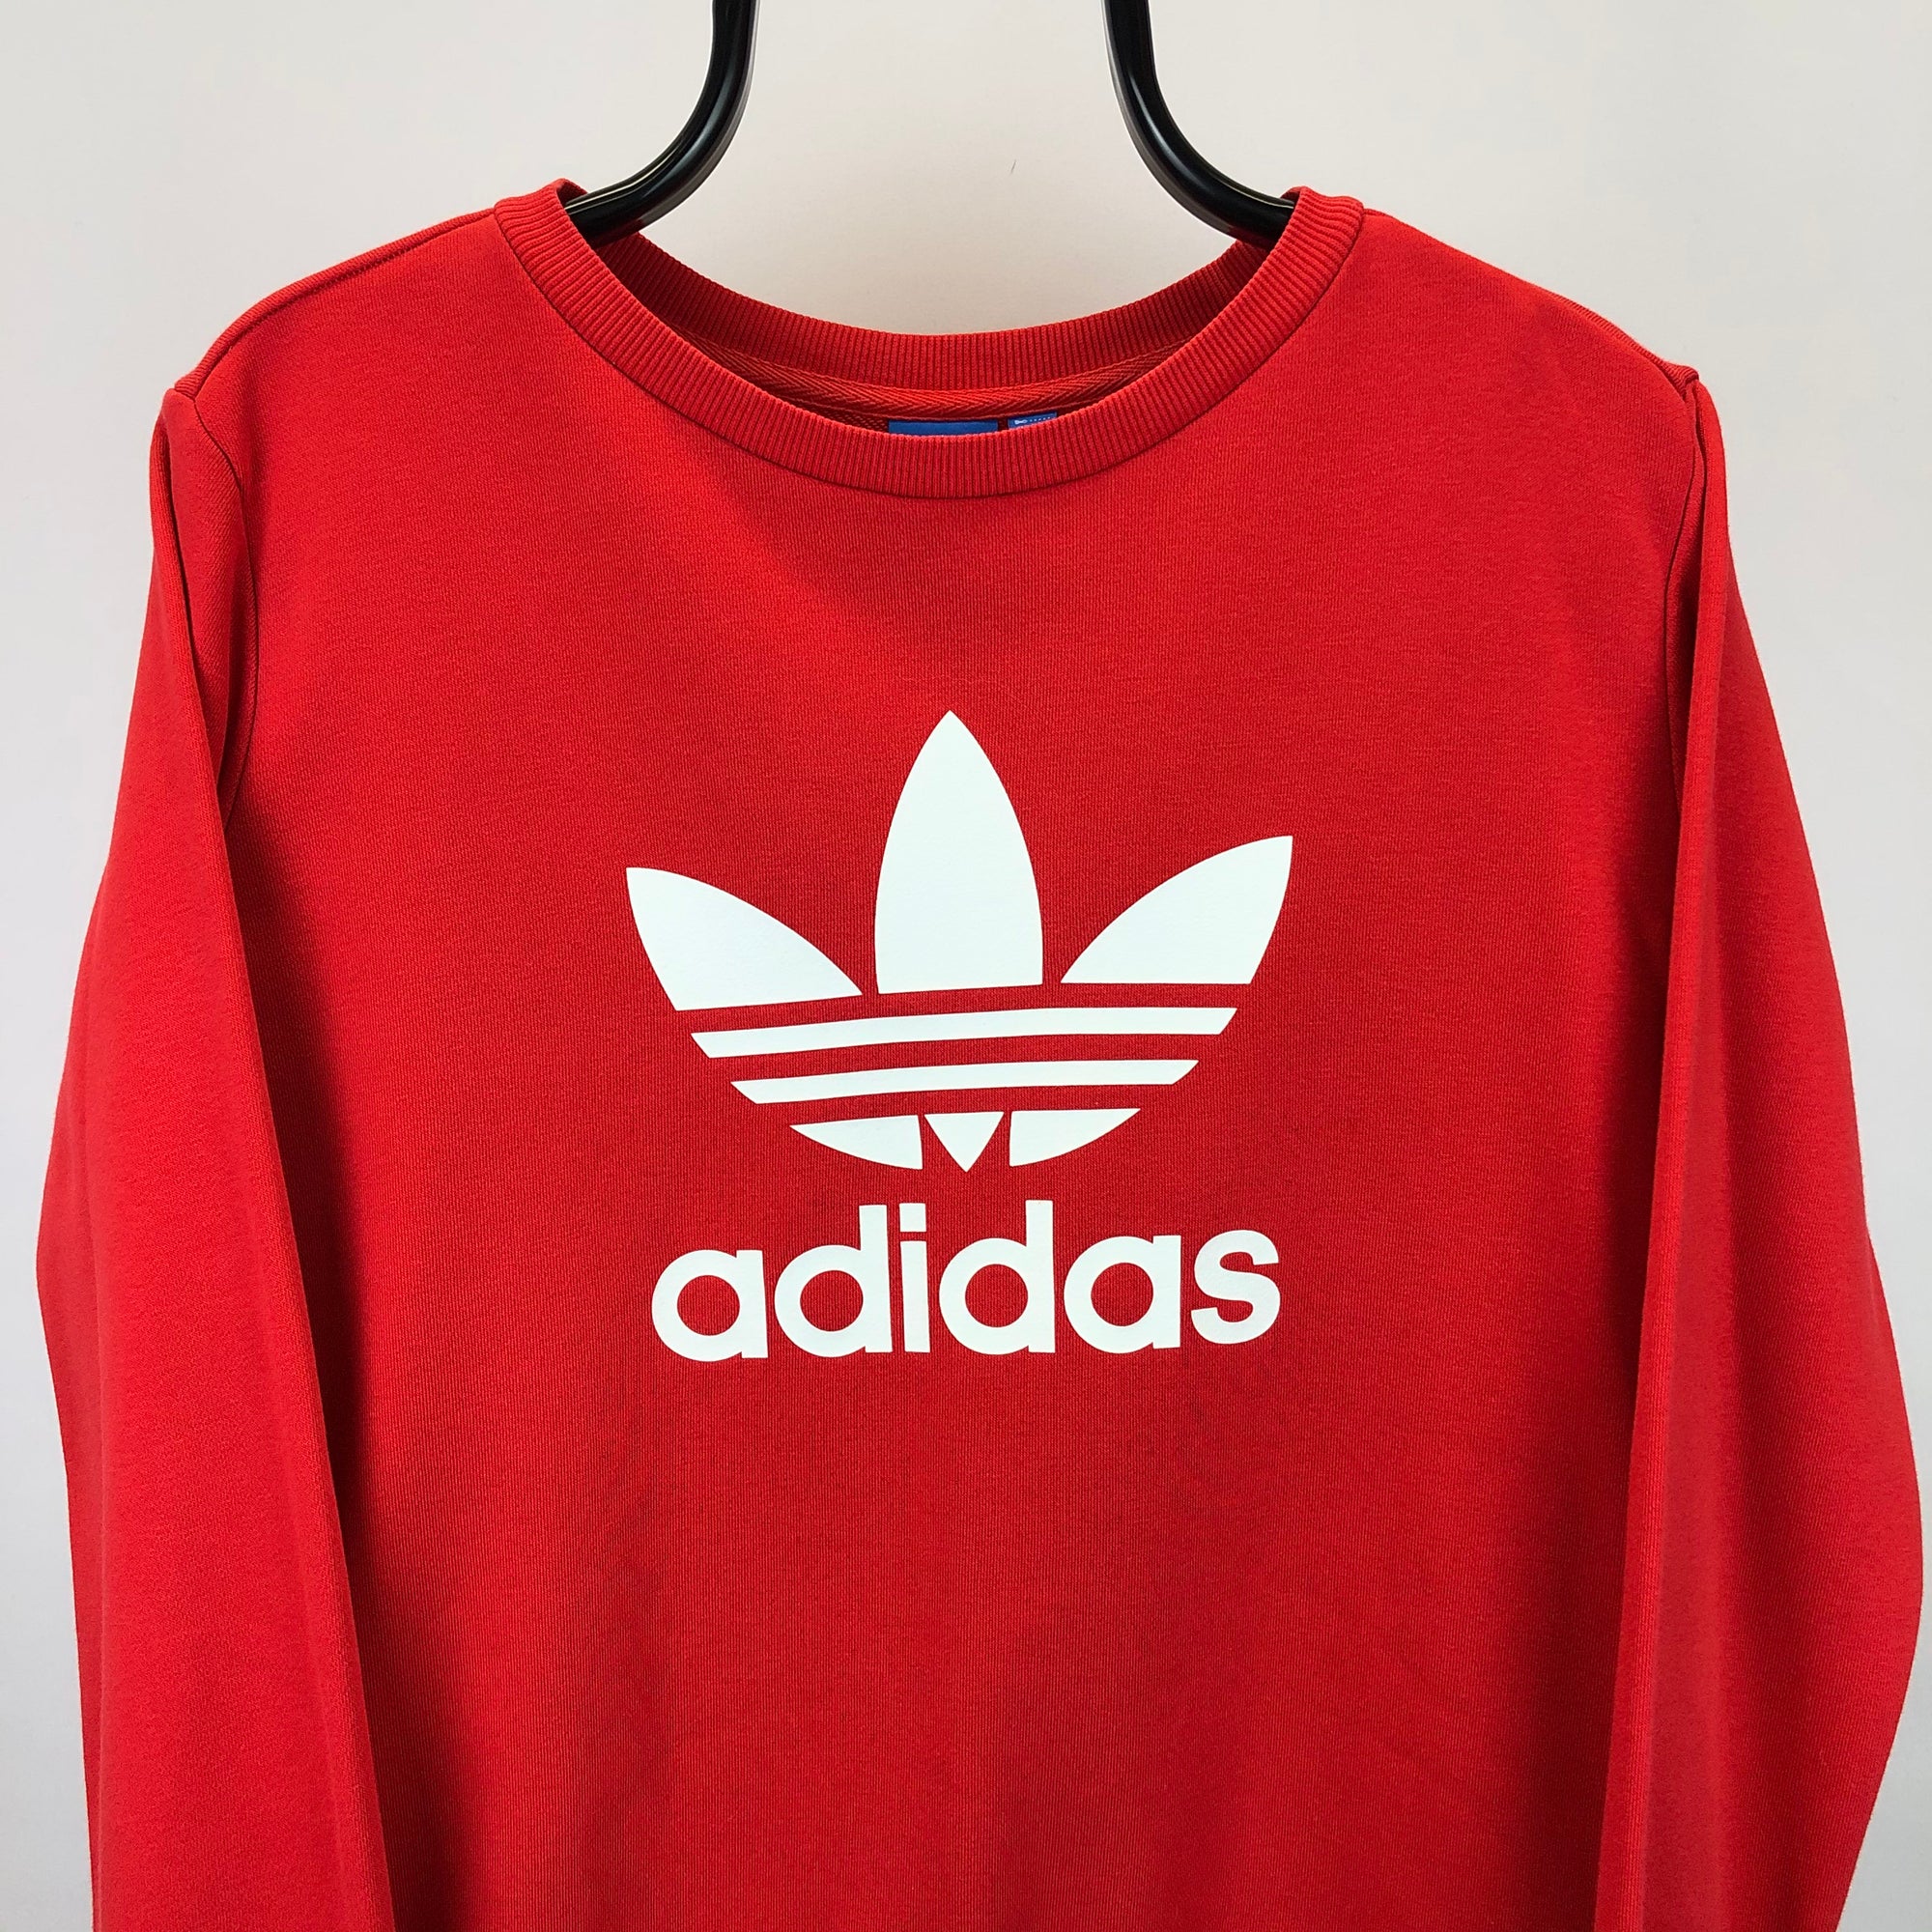 Adidas Spellout Sweatshirt in Red/White - Men's Medium/Women's Large